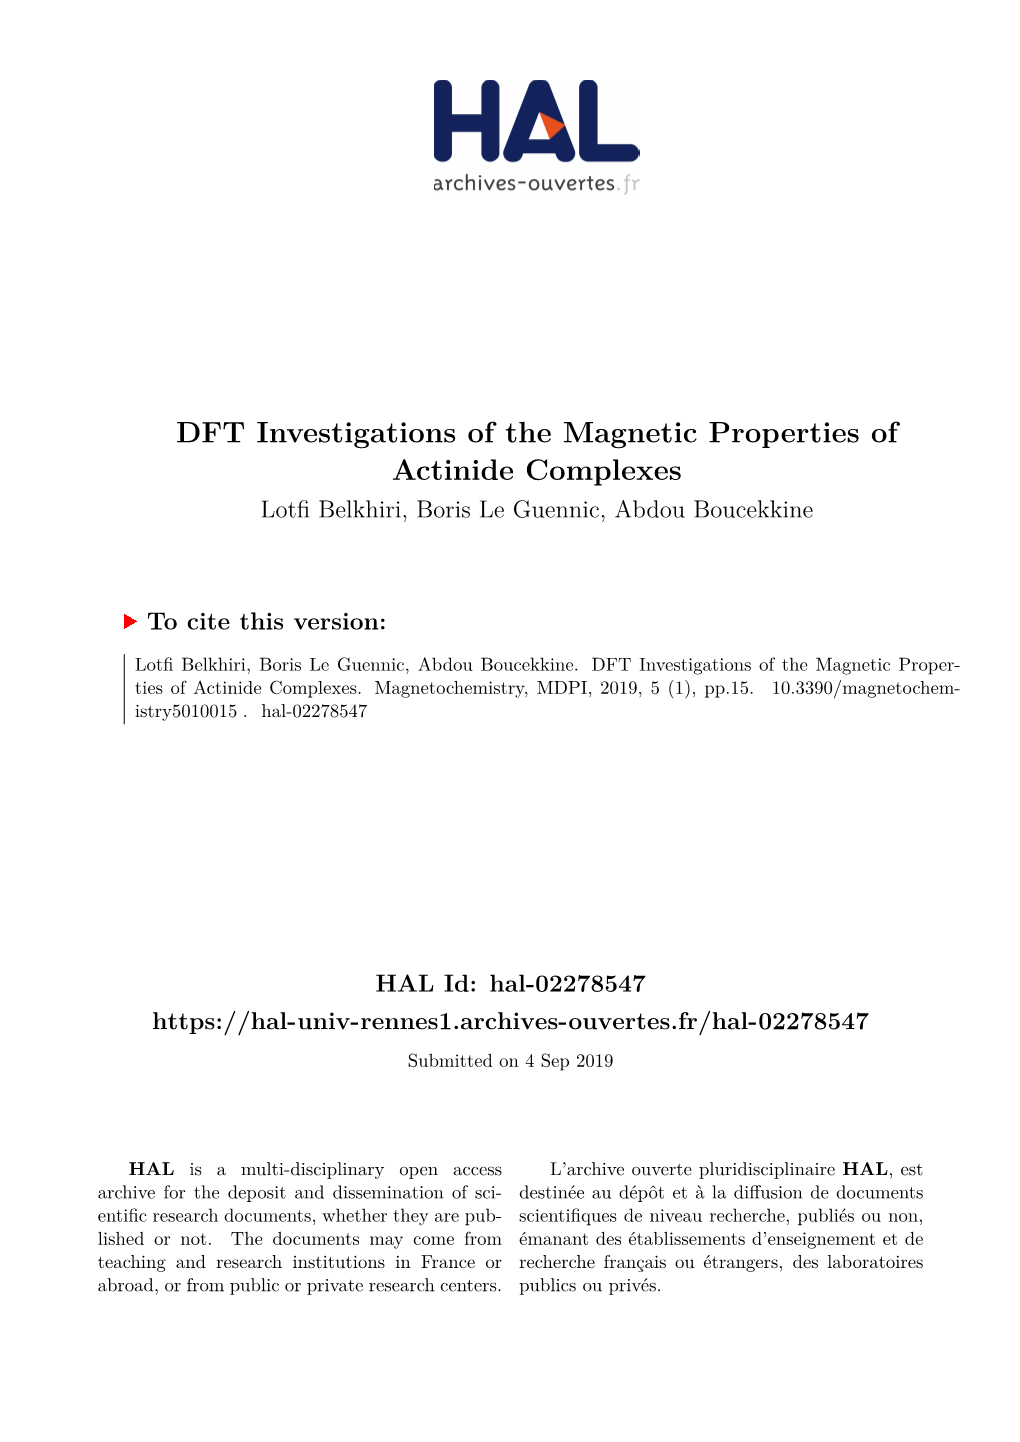 DFT Investigations of the Magnetic Properties of Actinide Complexes Lotfi Belkhiri, Boris Le Guennic, Abdou Boucekkine